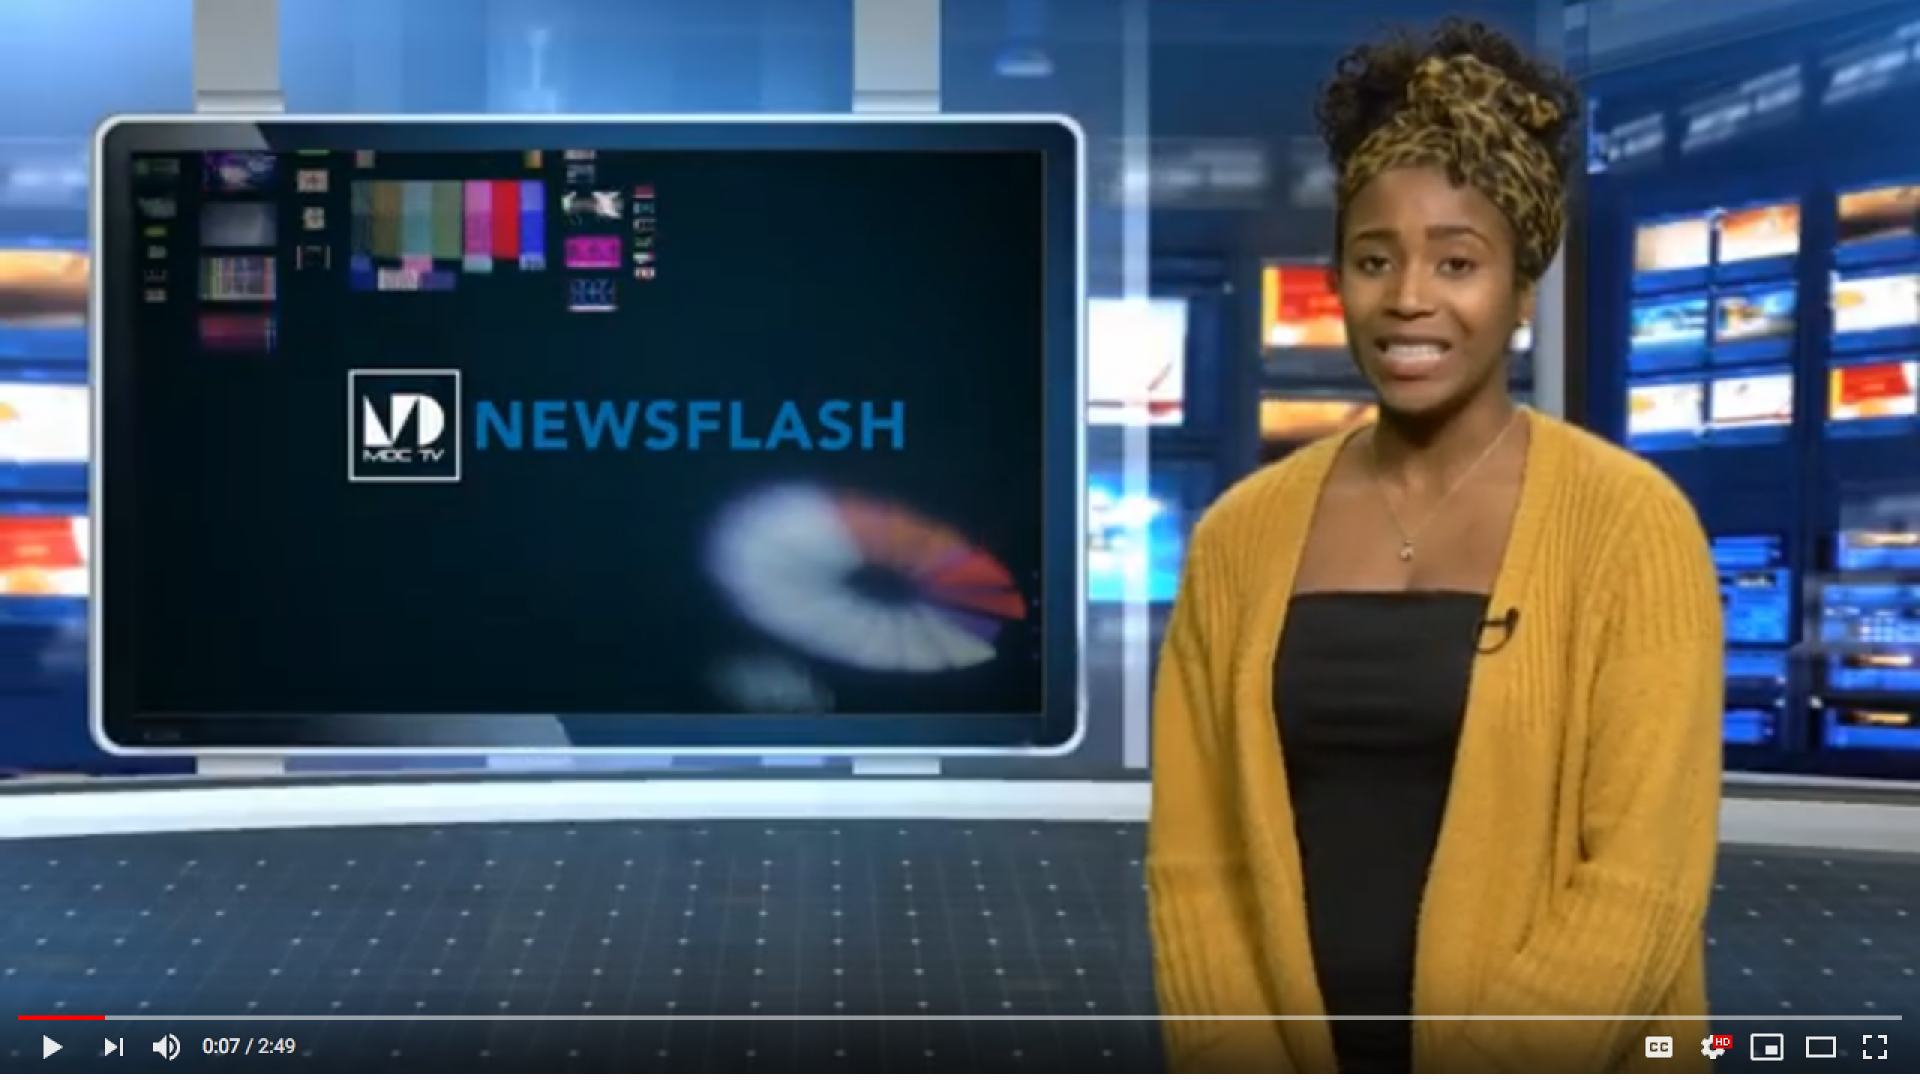 MDC News anchor on set